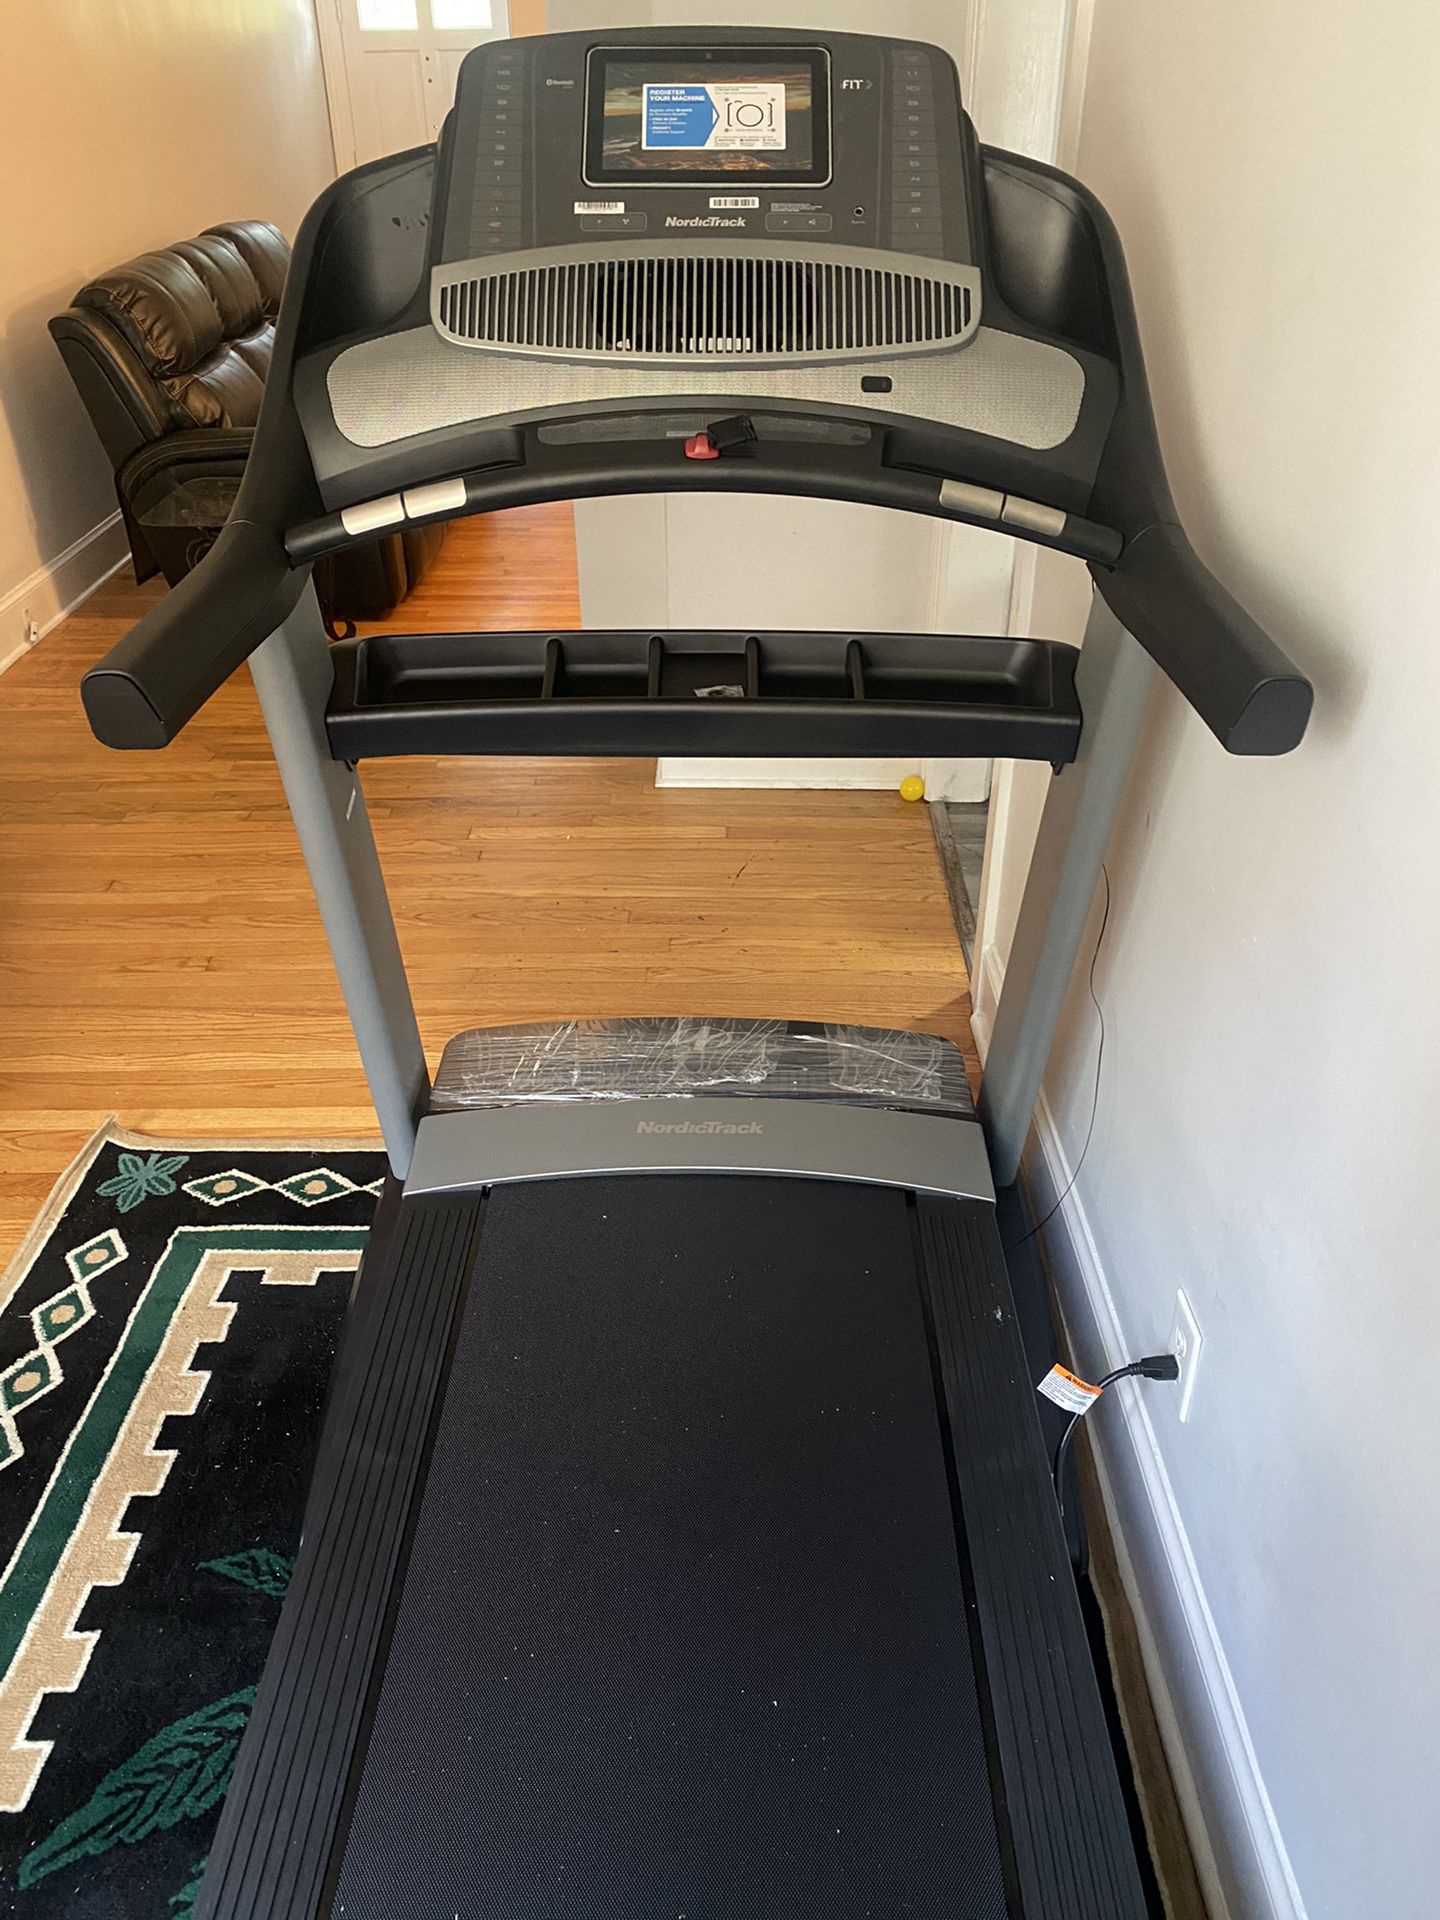 Commercial 2450 NordicTrack treadmill (New)